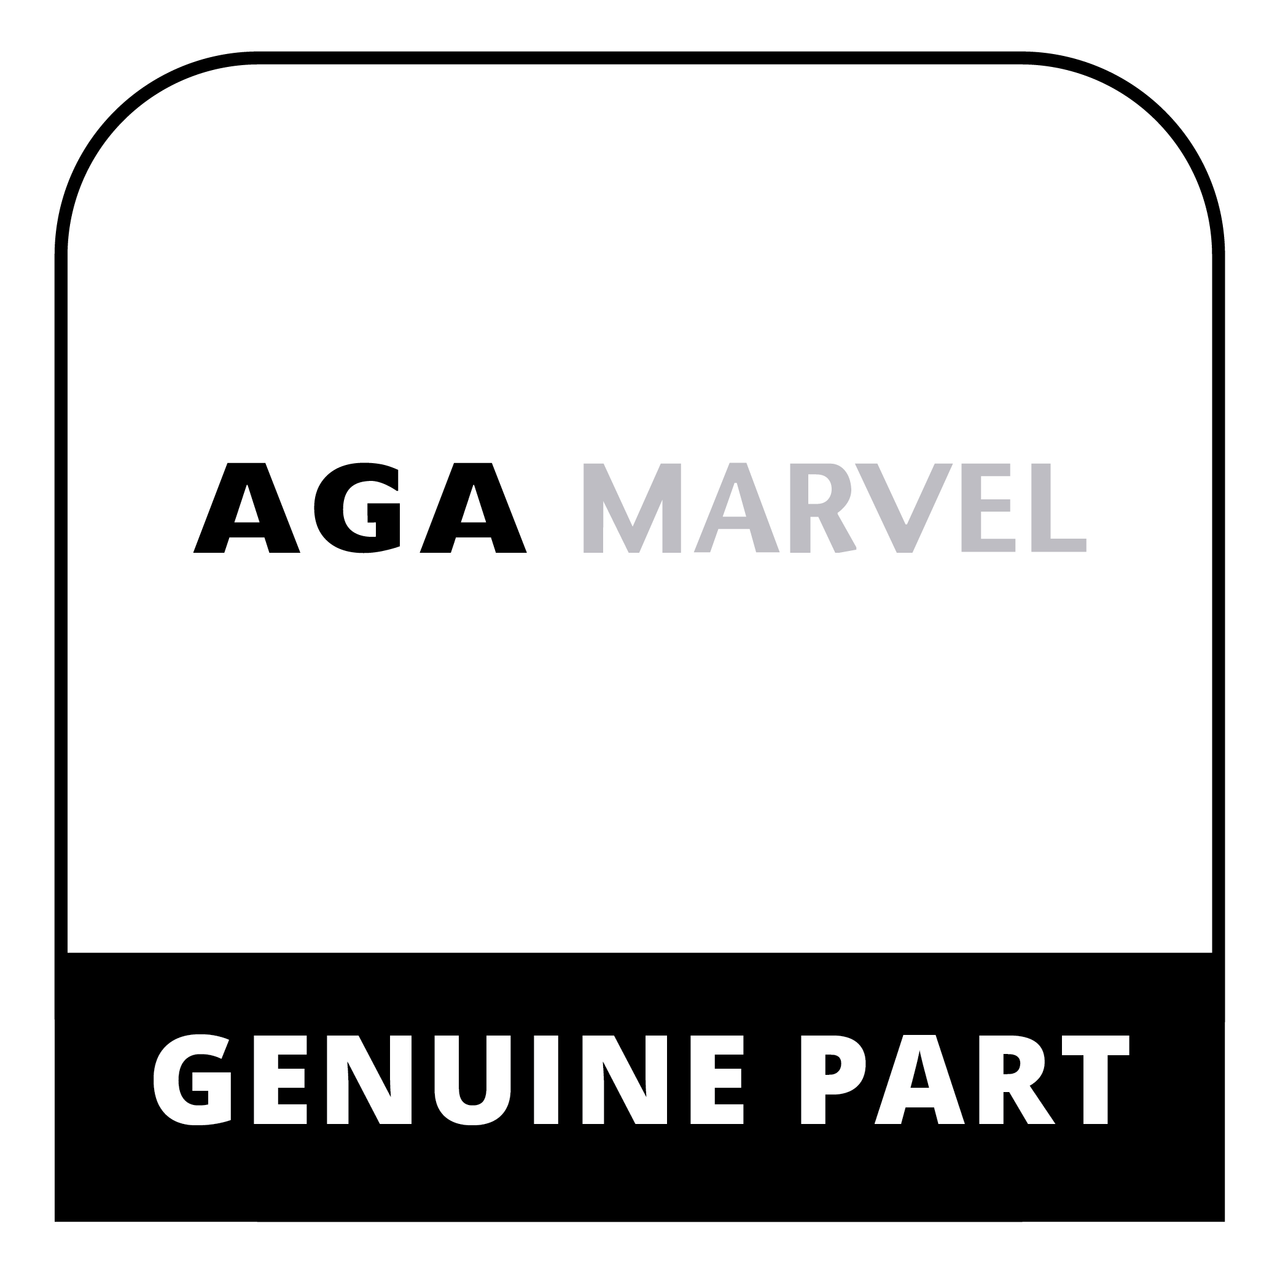 AGA Marvel 90-54091-68 - A/C-H&T Main Hf 24 - 6-Month Lead Time - Genuine AGA Marvel Part